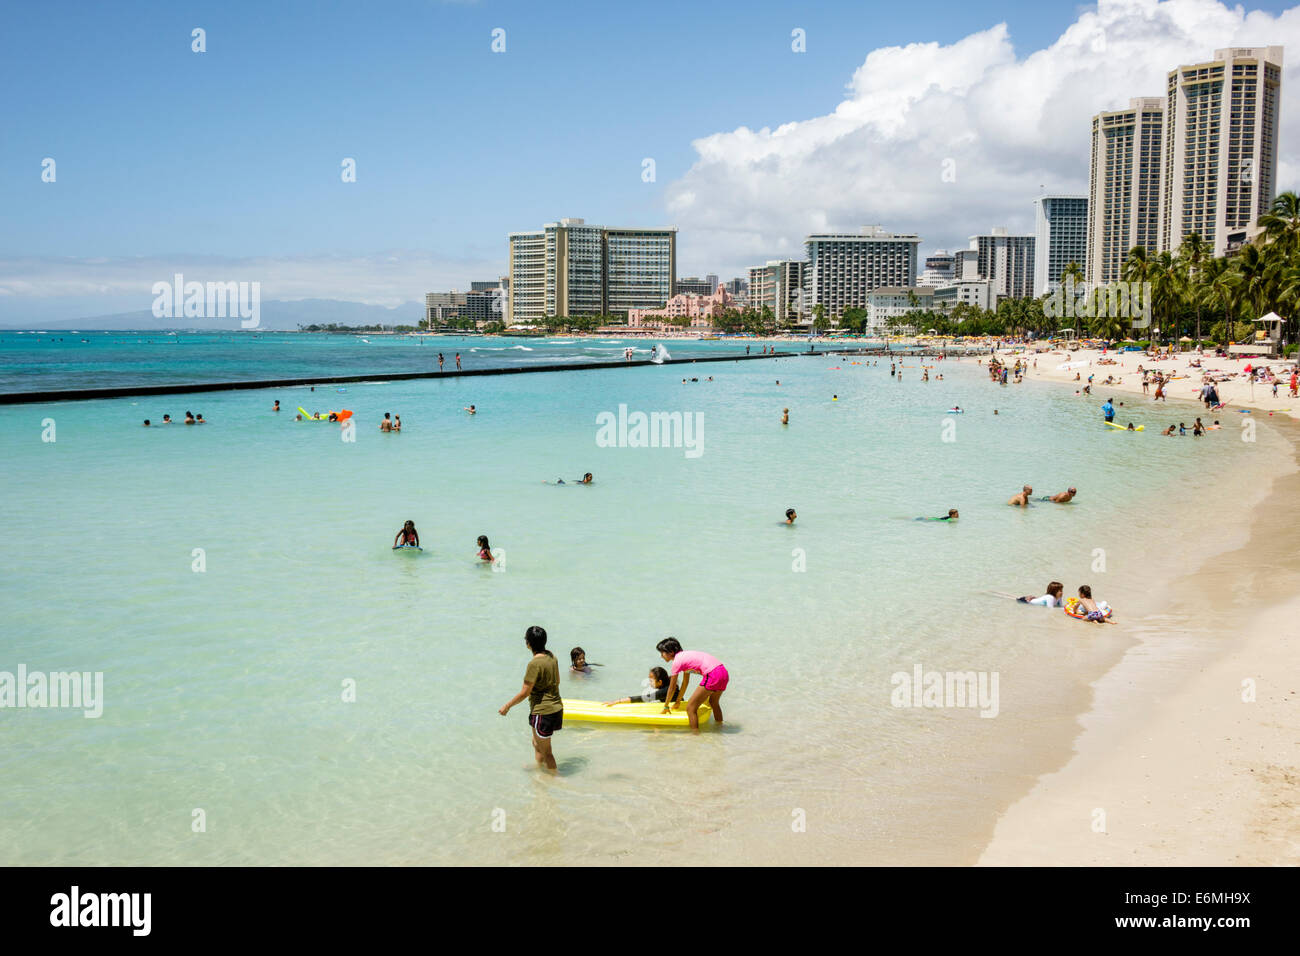 Honolulu Waikiki Beach Hawaii, Hawaiian, Oahu, Kuhio Beach Park, Océan Pacifique, Sheraton, hôtel, Hyatt Regency, front de mer, bains de soleil, sable, horizon de la ville, haut r Banque D'Images